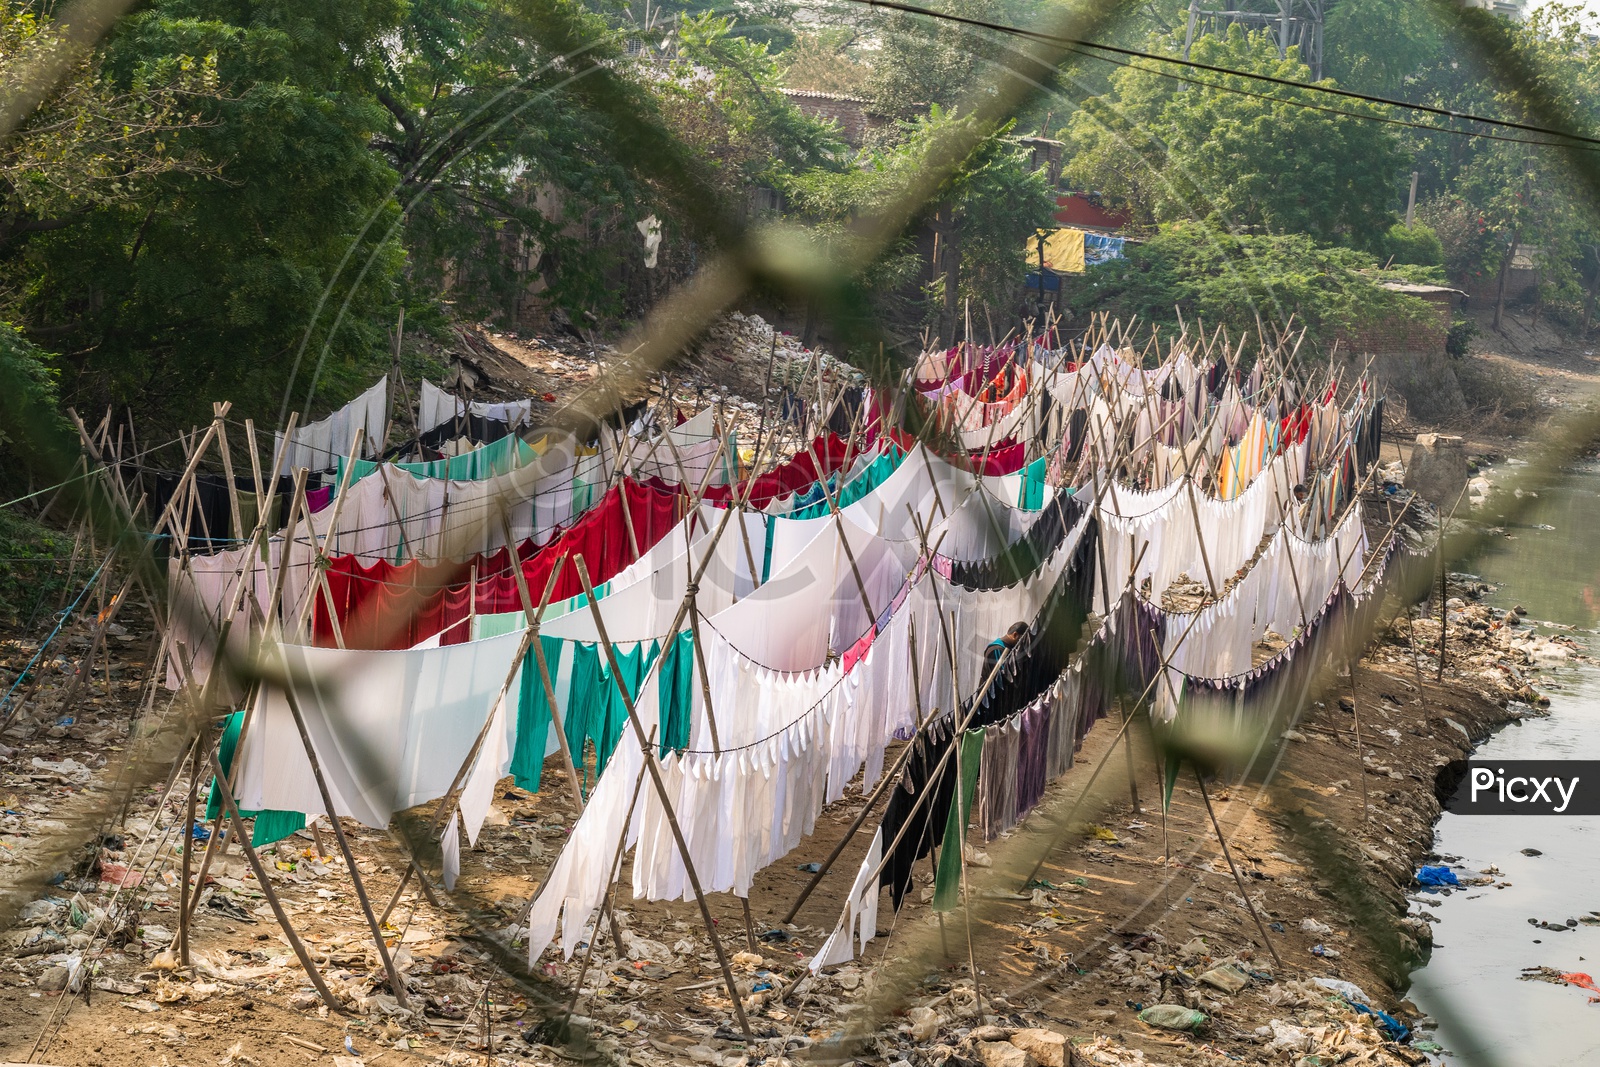 Laundry drying near a Dhobi Ghat